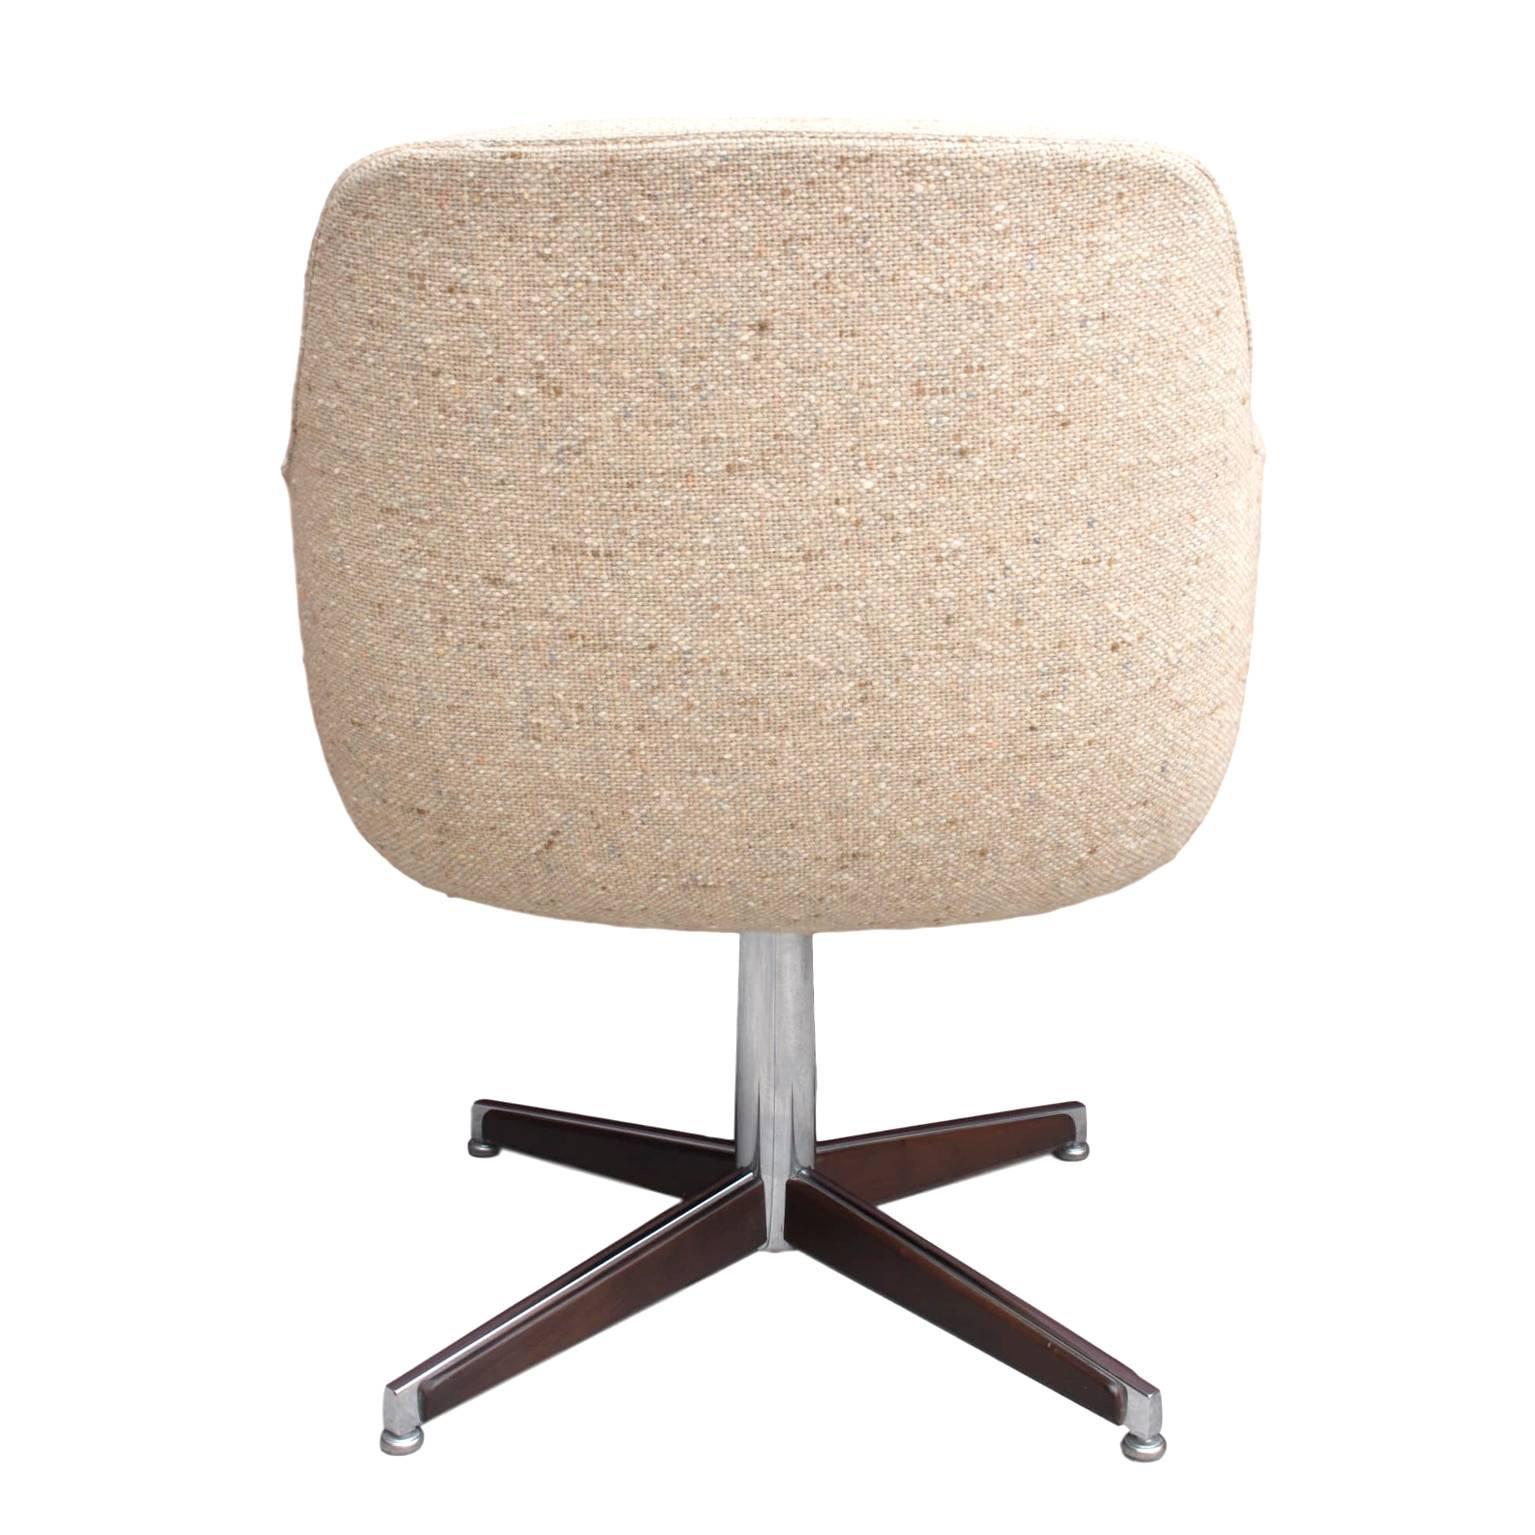 American 1960s, Mid-Century Modern Walnut & Chrome Desk Chair with Cream Upholstery